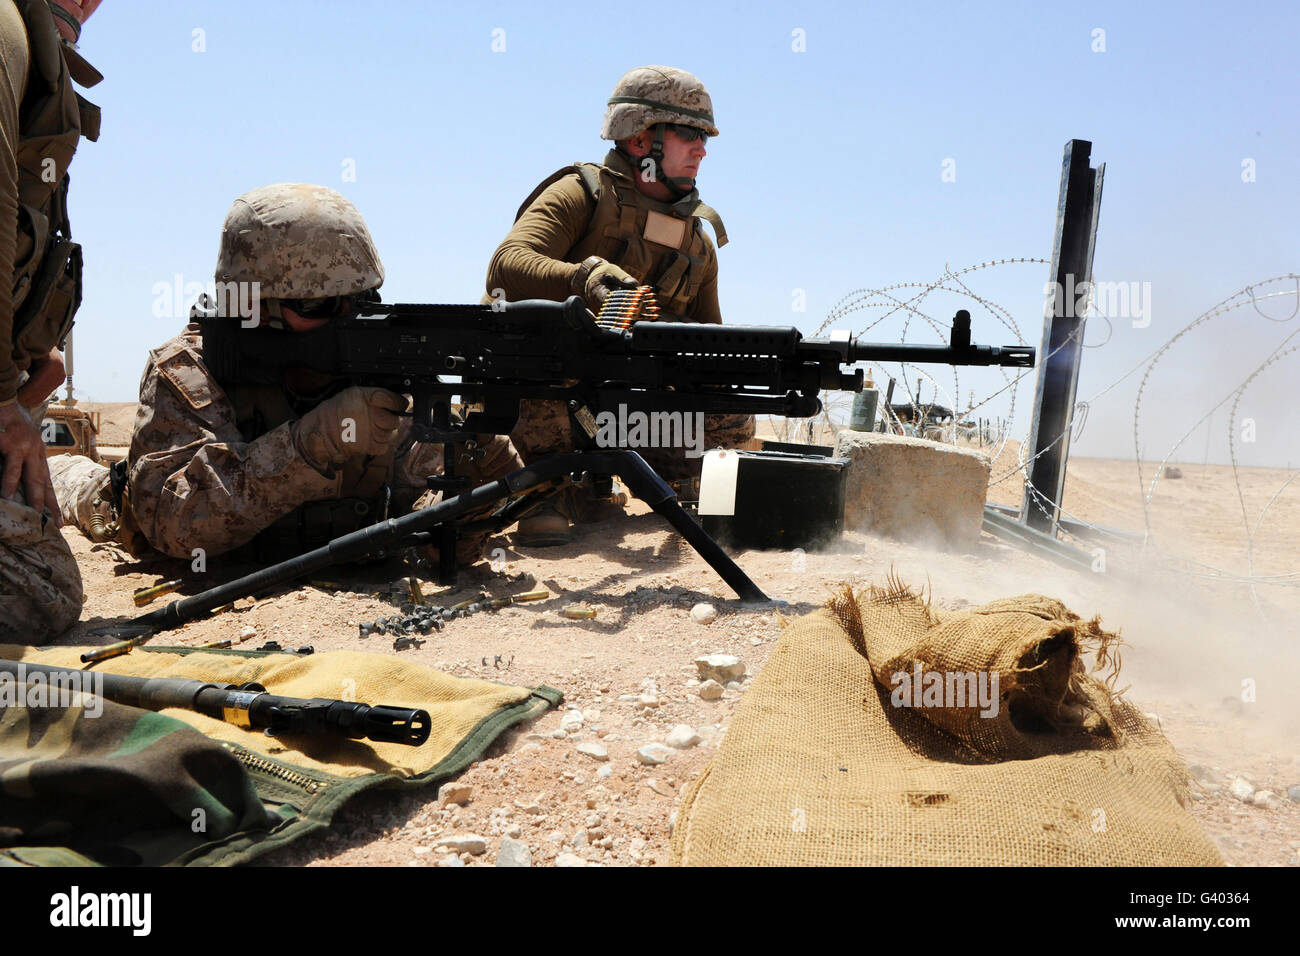 Soldier fires an M240B machine gun during marksmanship training. Stock Photo